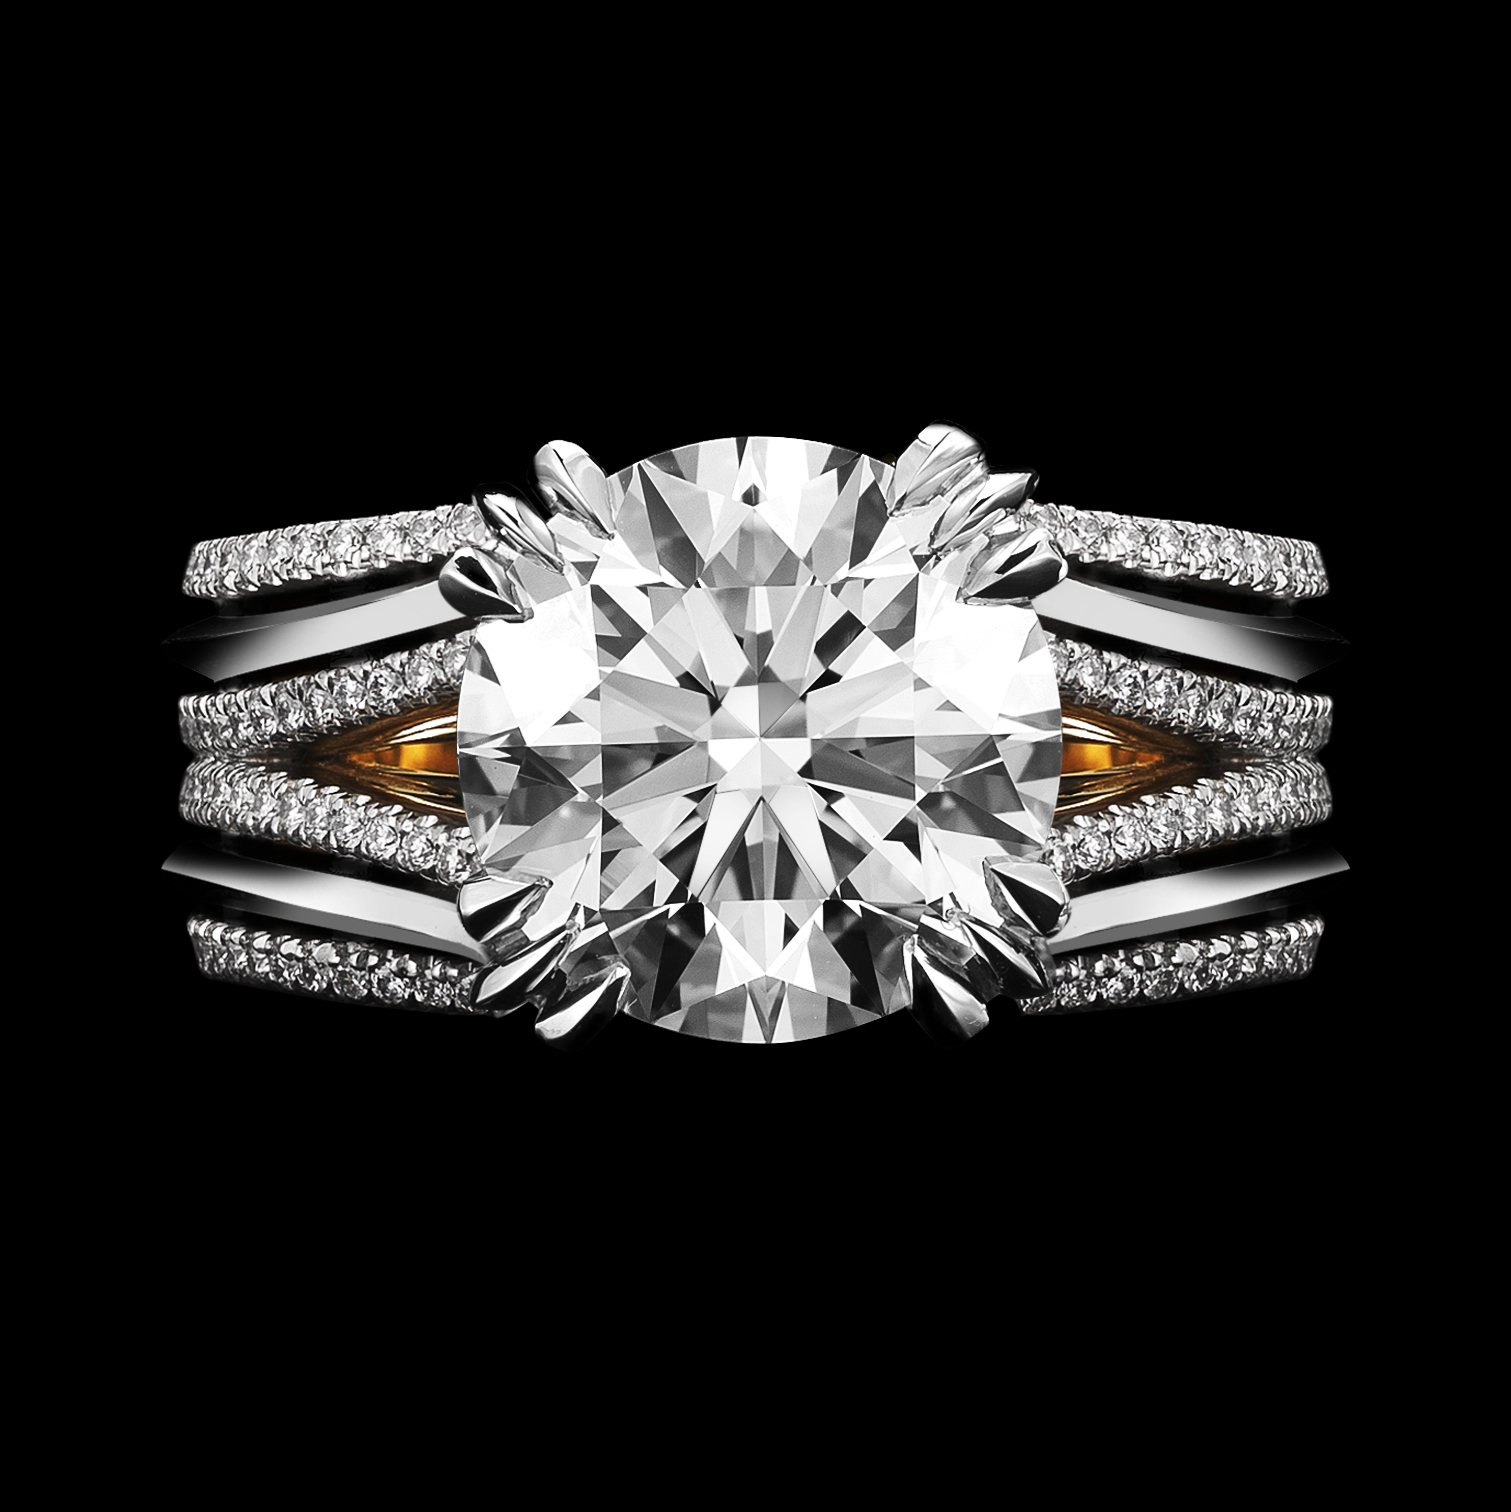  Double shank floating brilliant-cut diamond ring.&nbsp; 